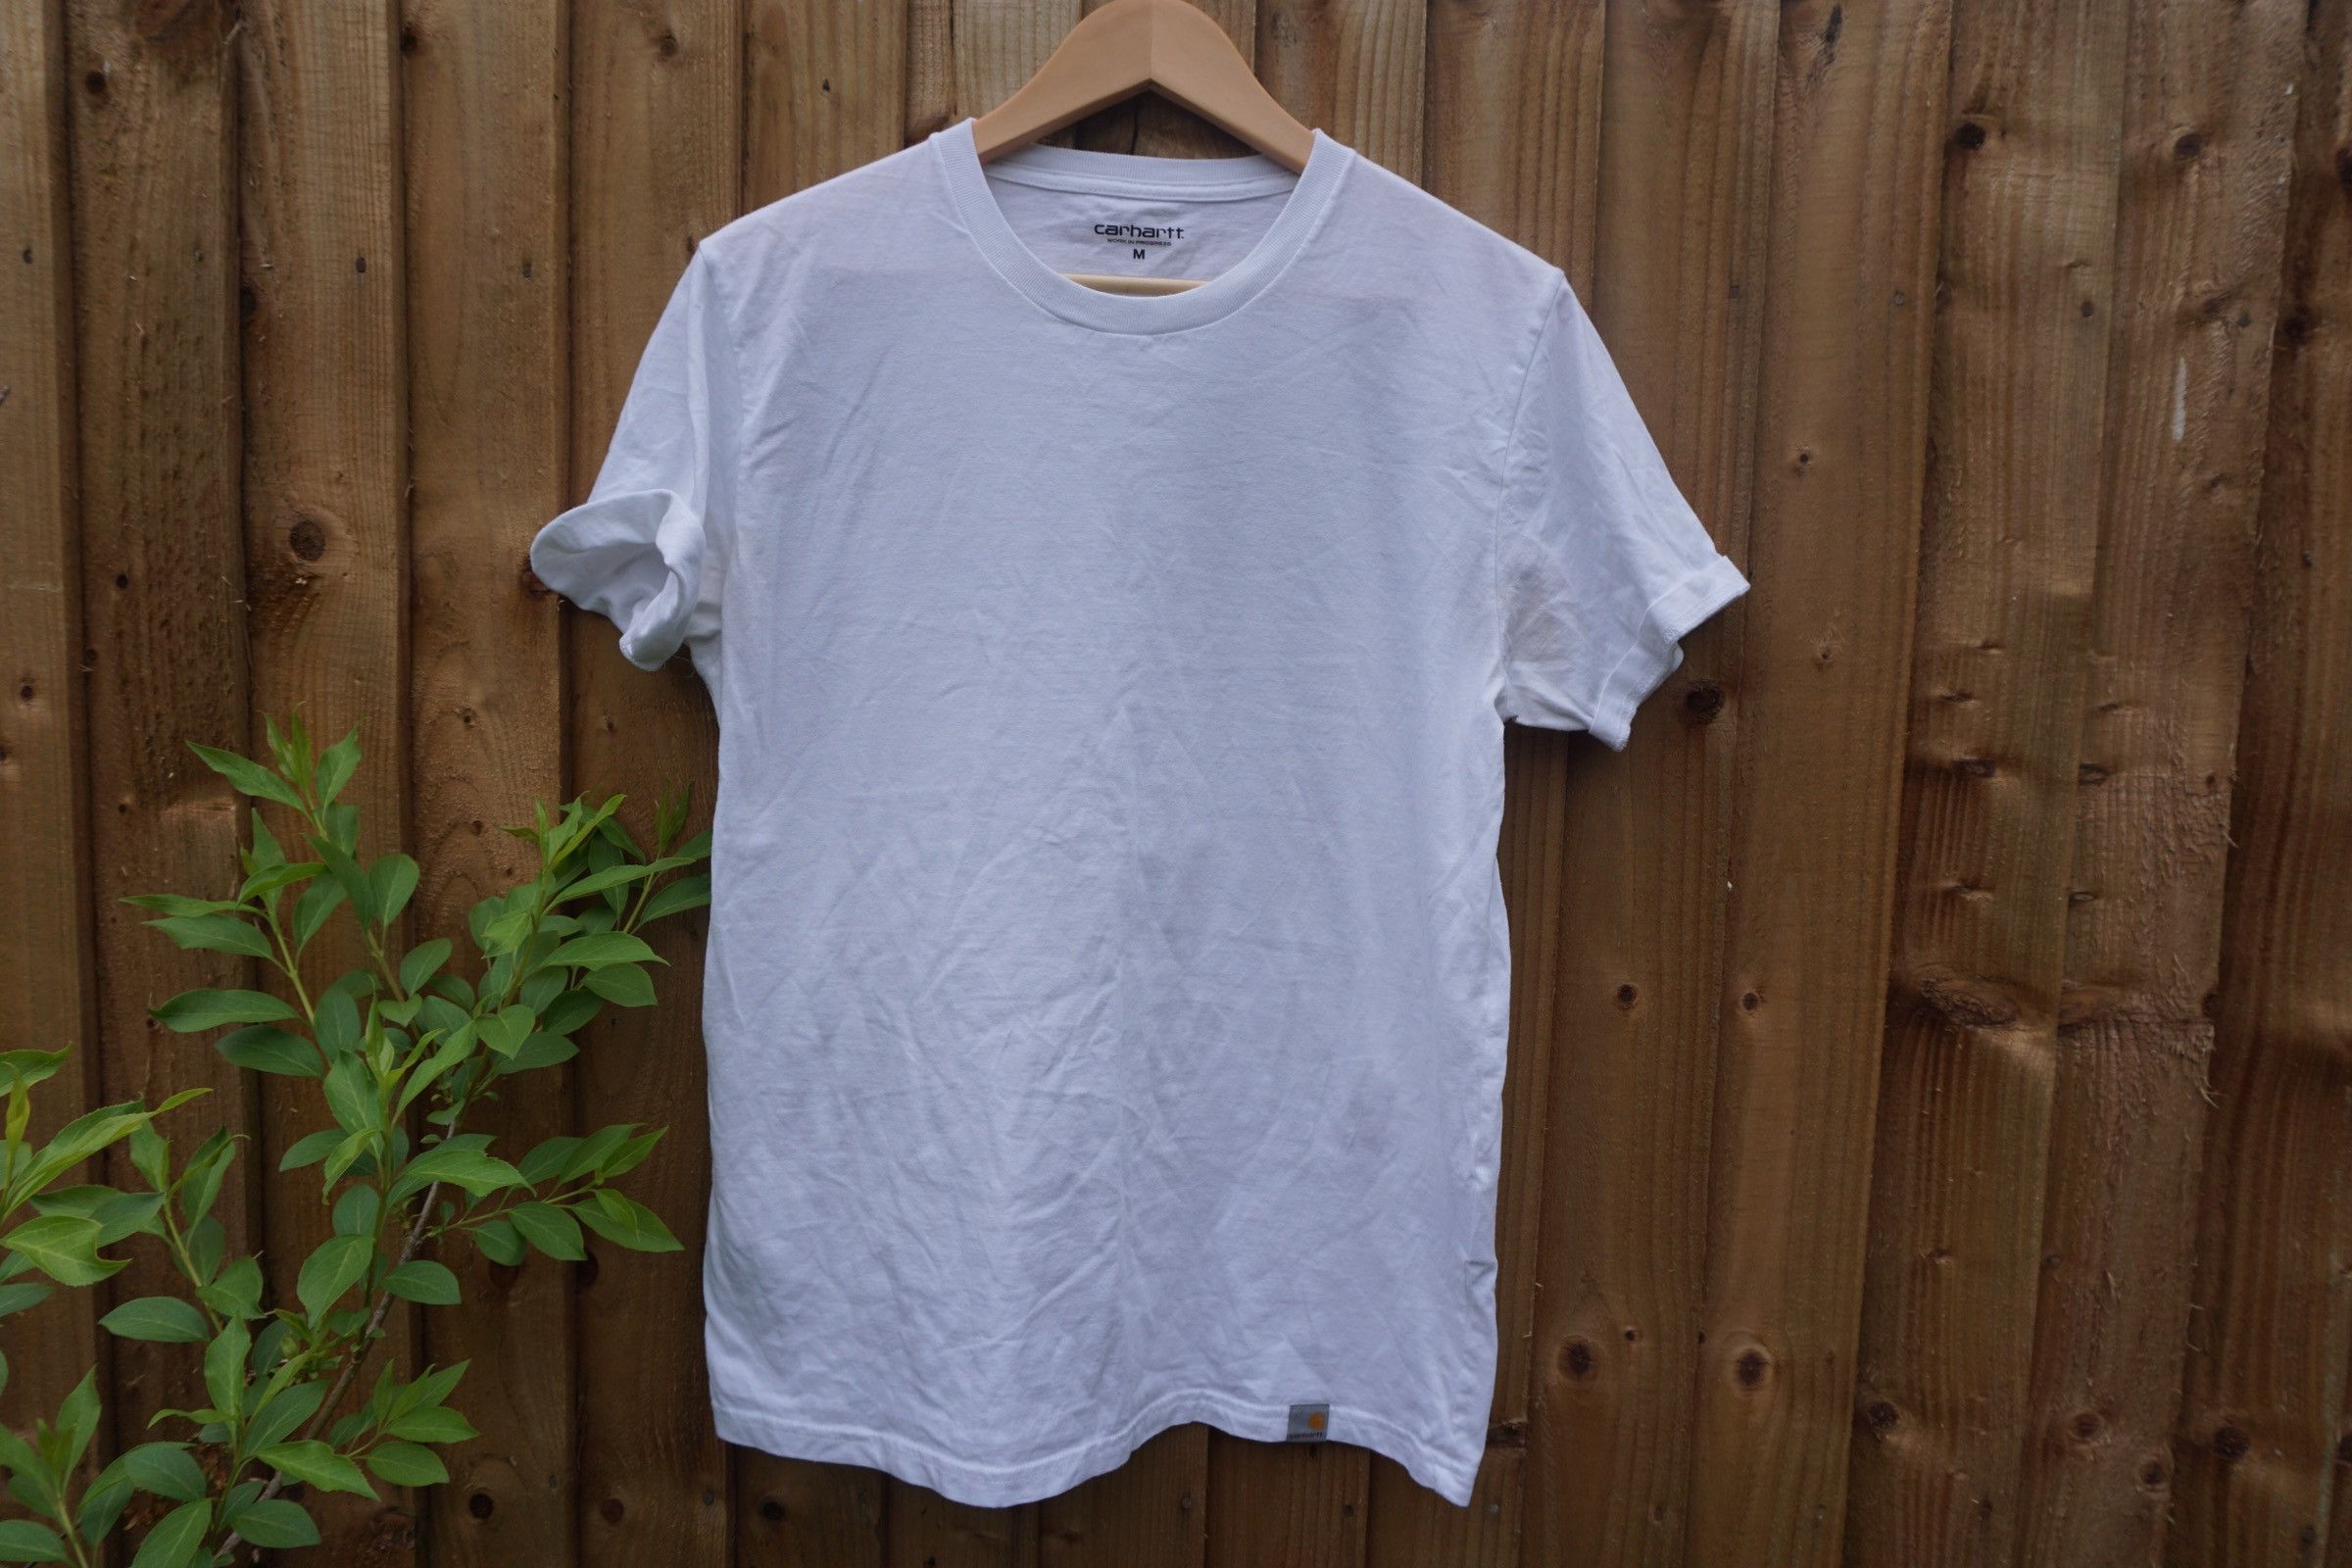 Carhartt Wip Medium, White T-shirt Size US M / EU 48-50 / 2 - 2 Preview